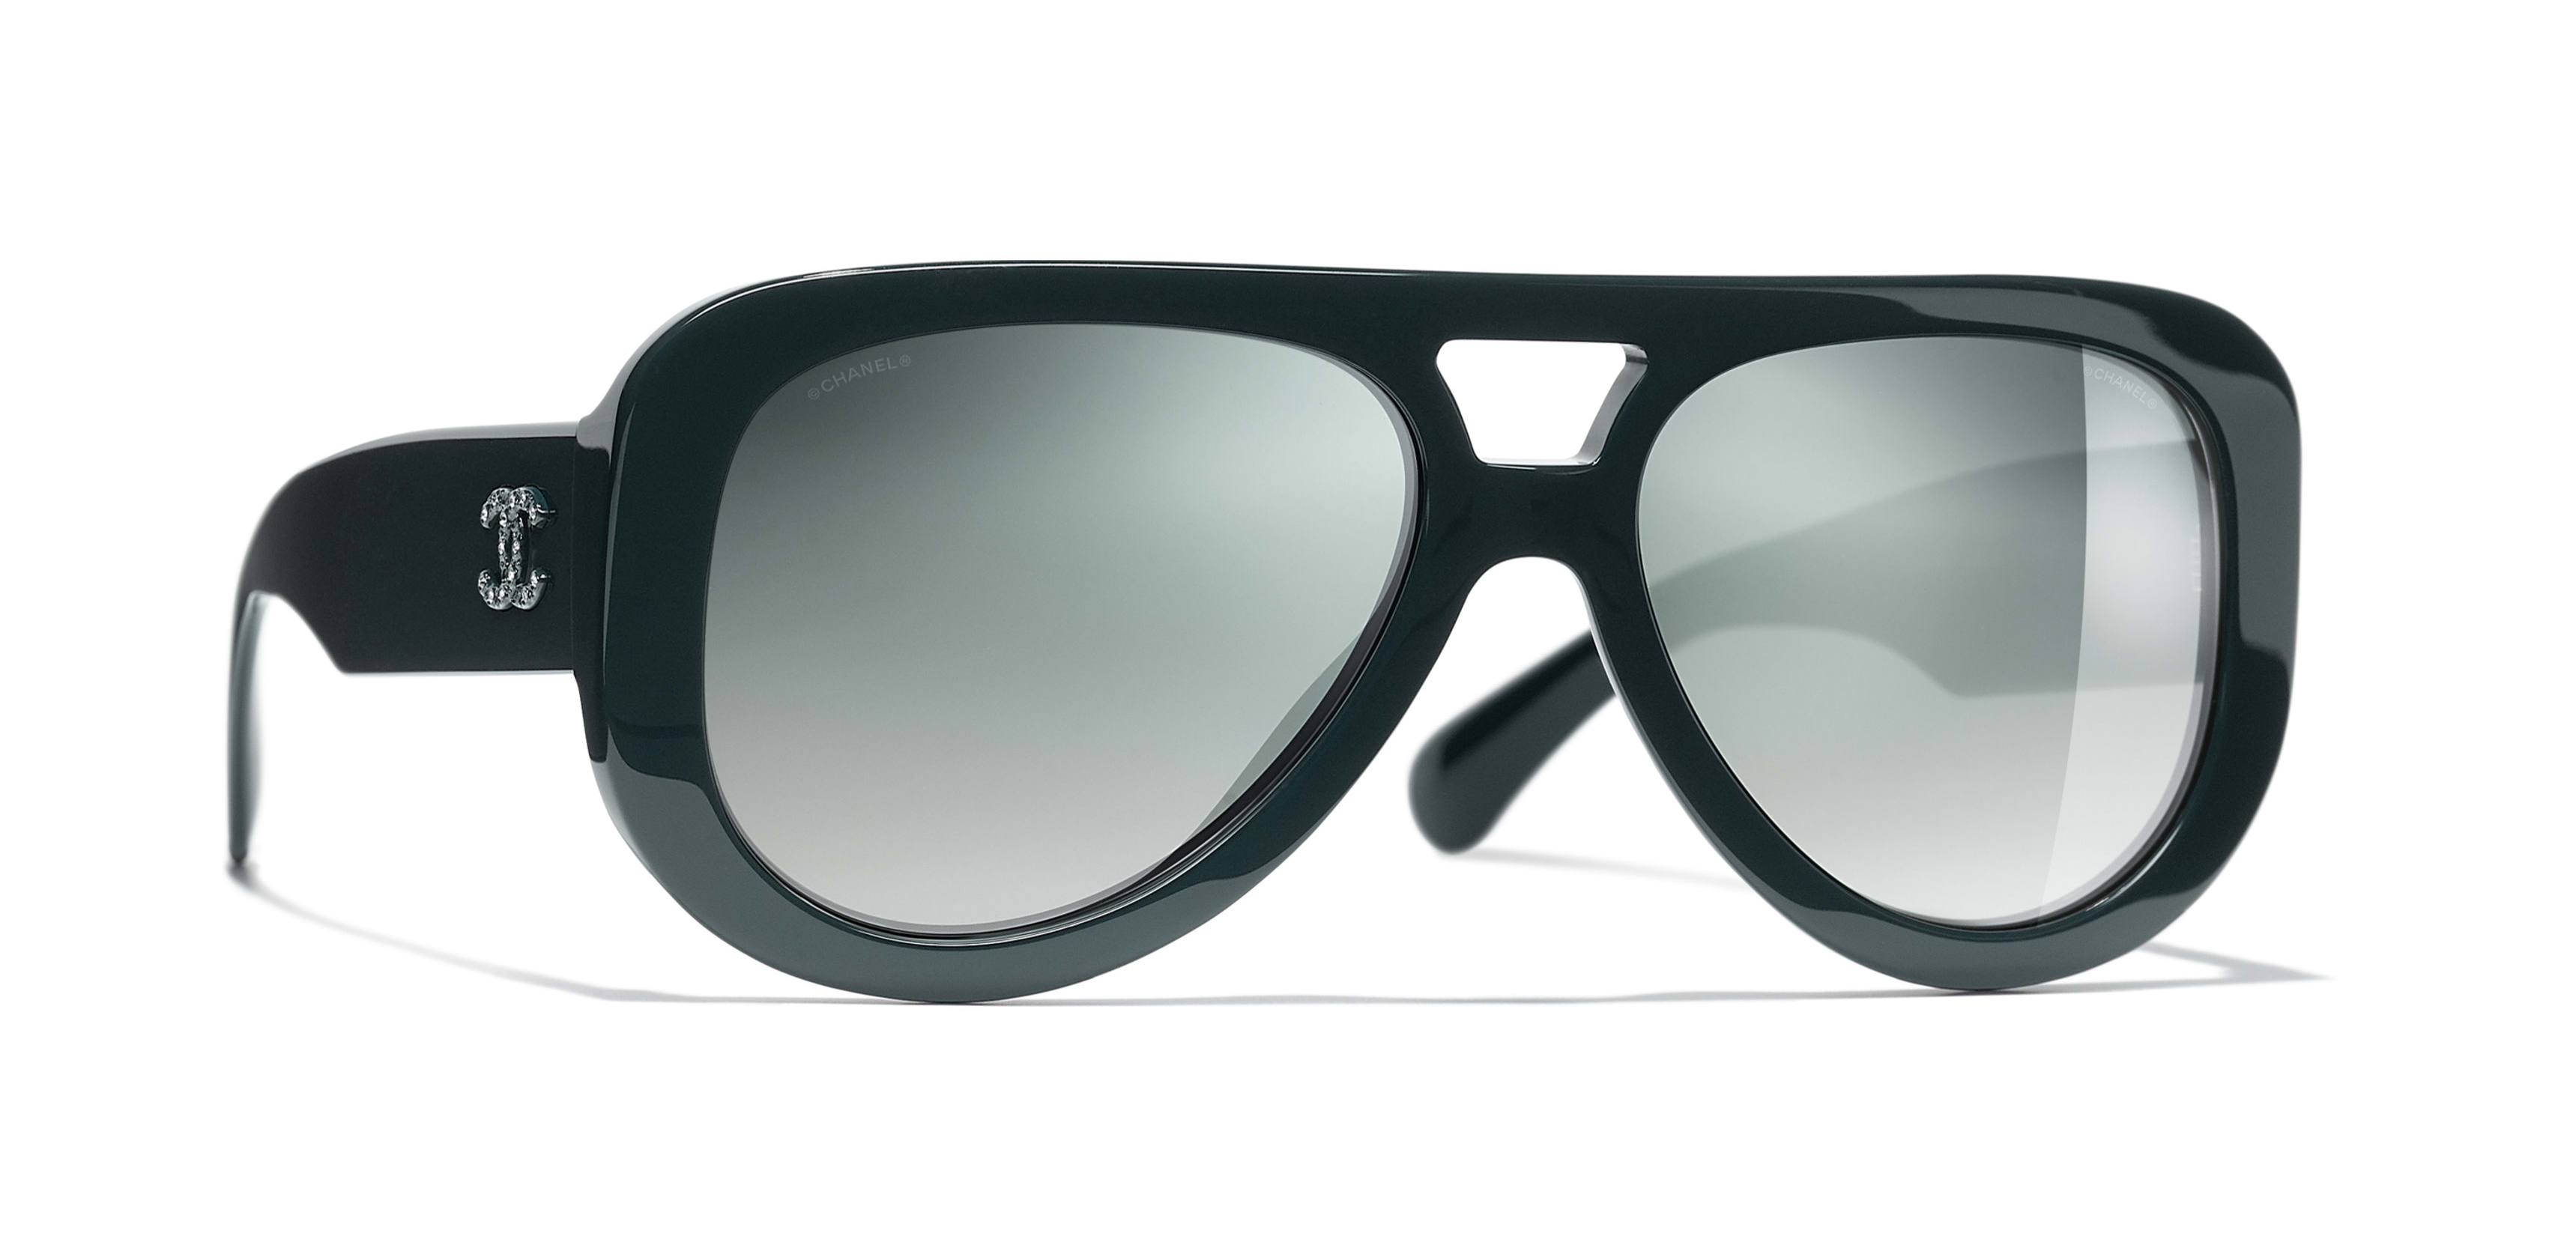 Chanel - Pilot Sunglasses - Dark Green Mirror - Chanel Eyewear